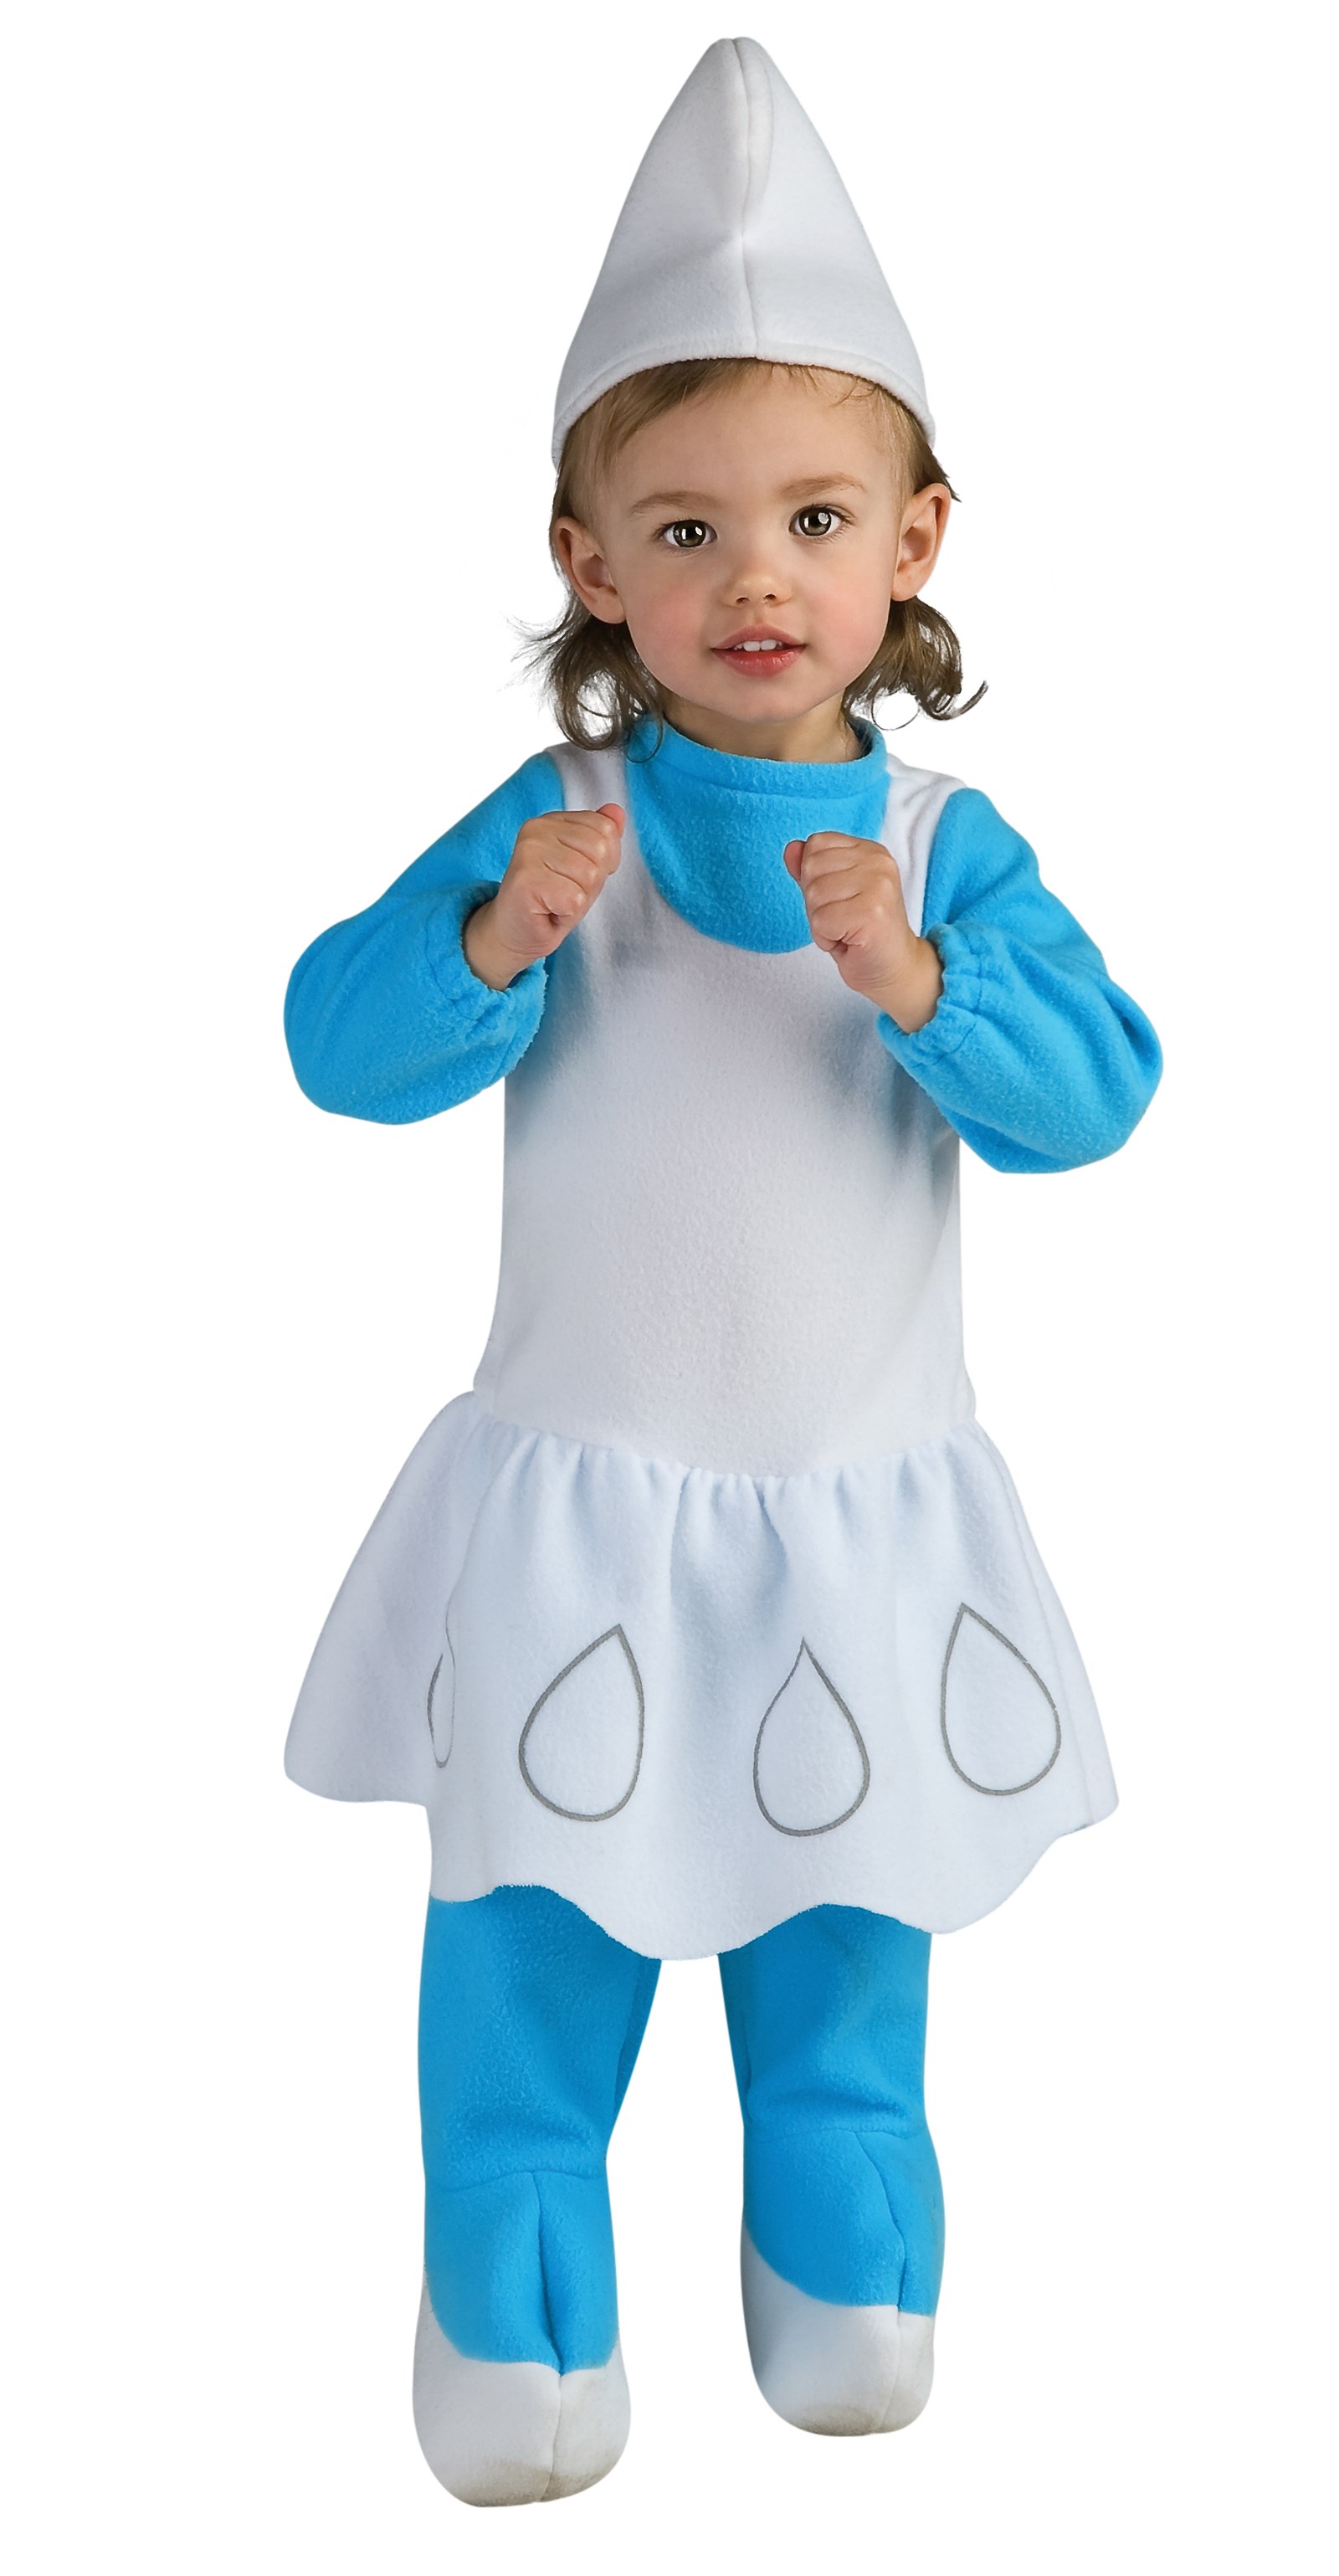 The Smurfs-Smurfette Infant/Toddler Costume